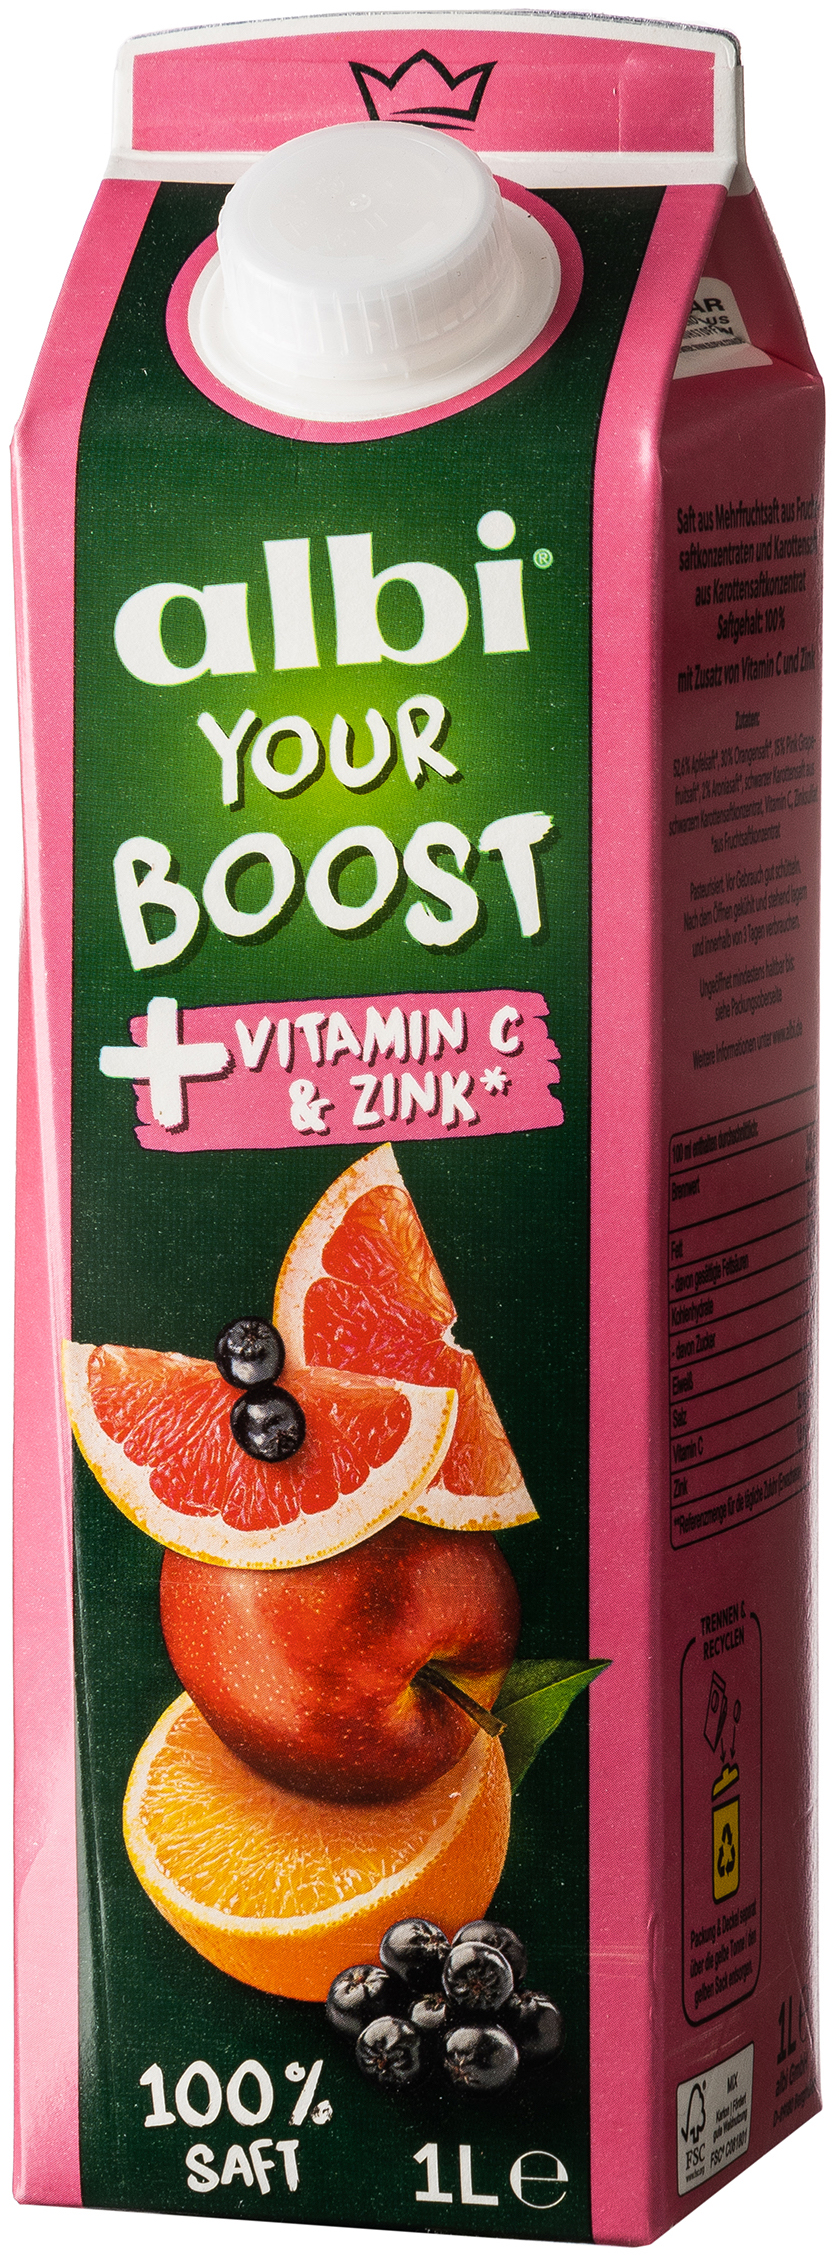 albi your boost - Plus Vitamin C & Zink 1,0L